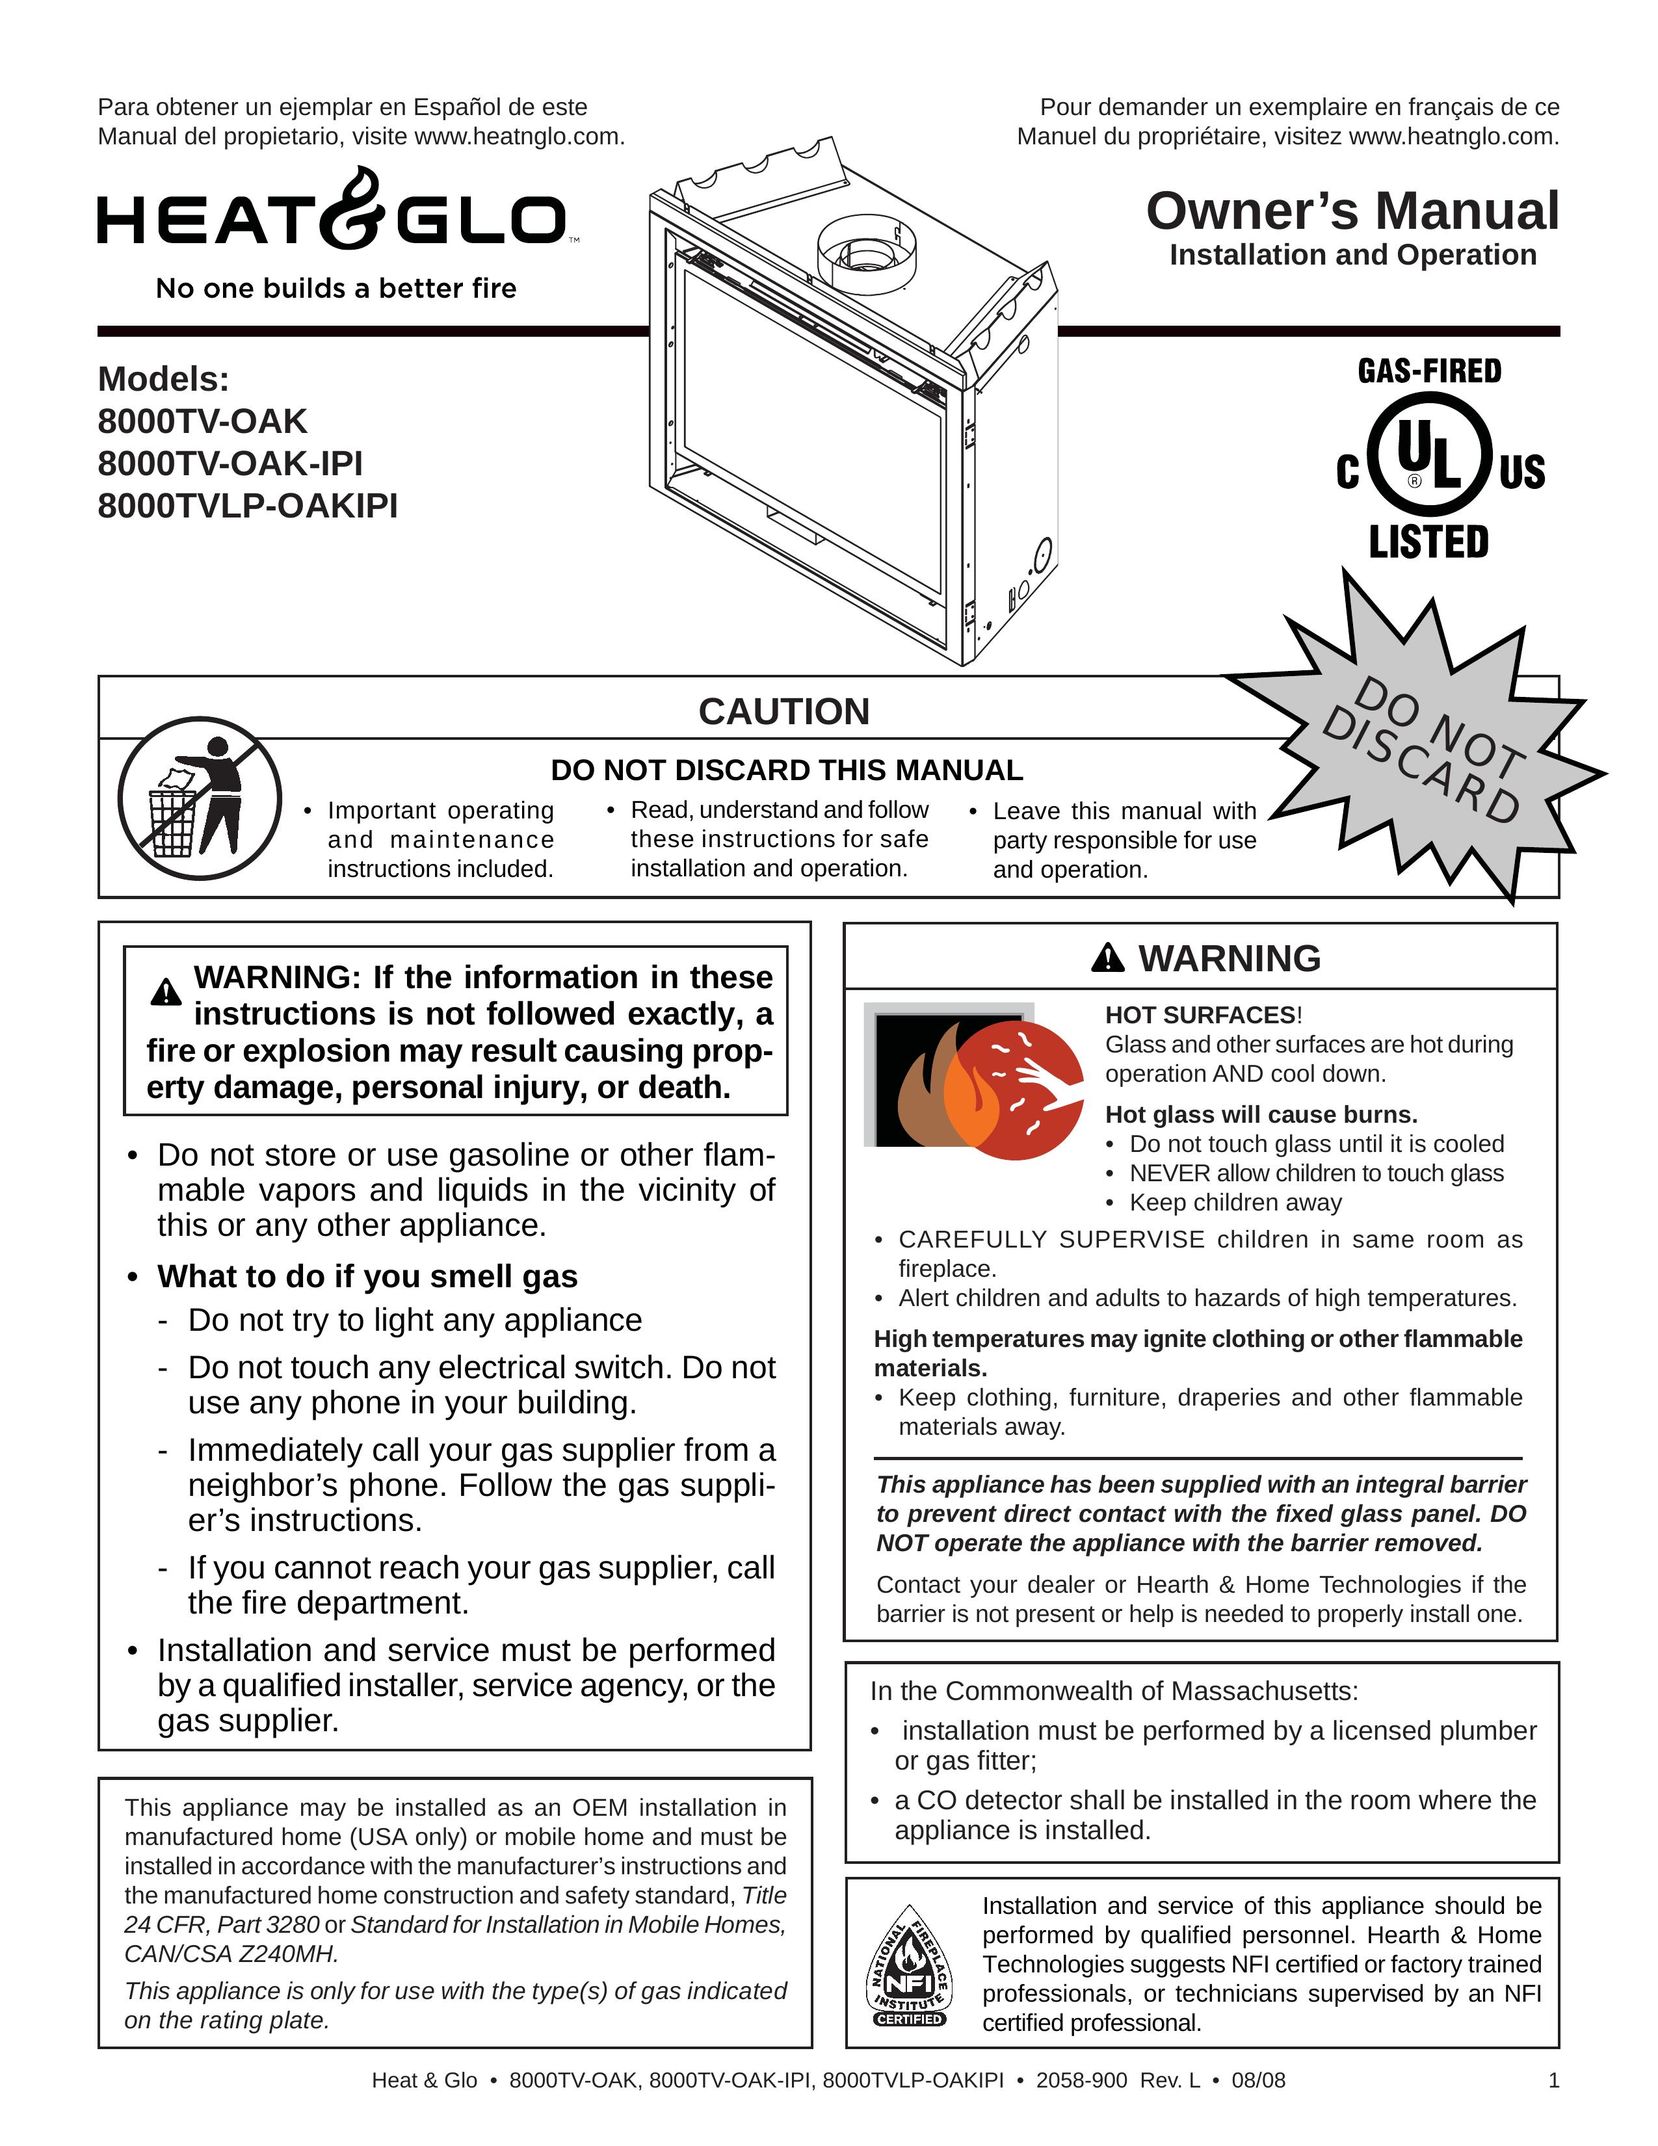 Heat & Glo LifeStyle 8000TVLP-OAKIPI Gas Heater User Manual